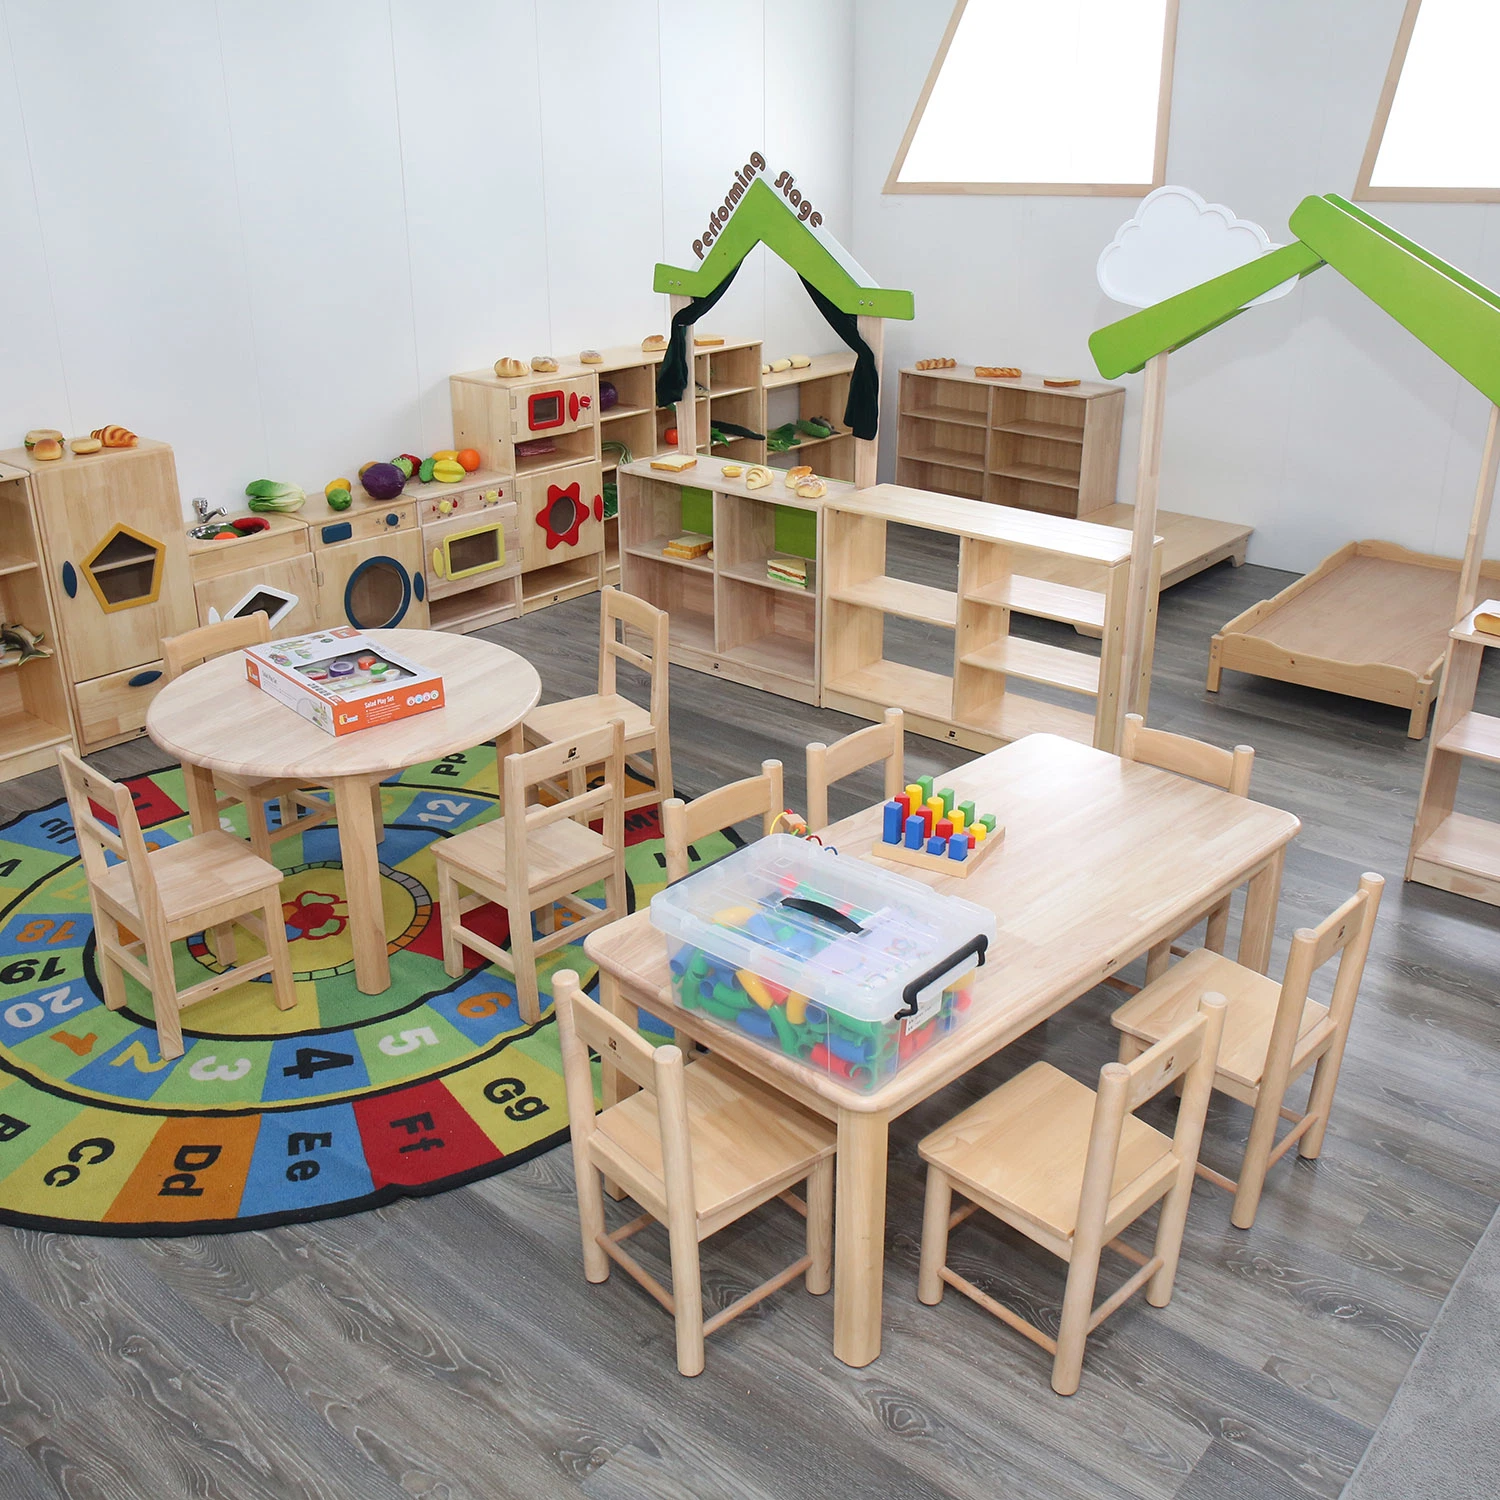 Silla de madera para niños, silla de mesa para estudiantes, silla de escritorio para niños, silla de aula escolar, mueble moderno para bebés, silla de preescolar y guardería, silla de muebles para el hogar.